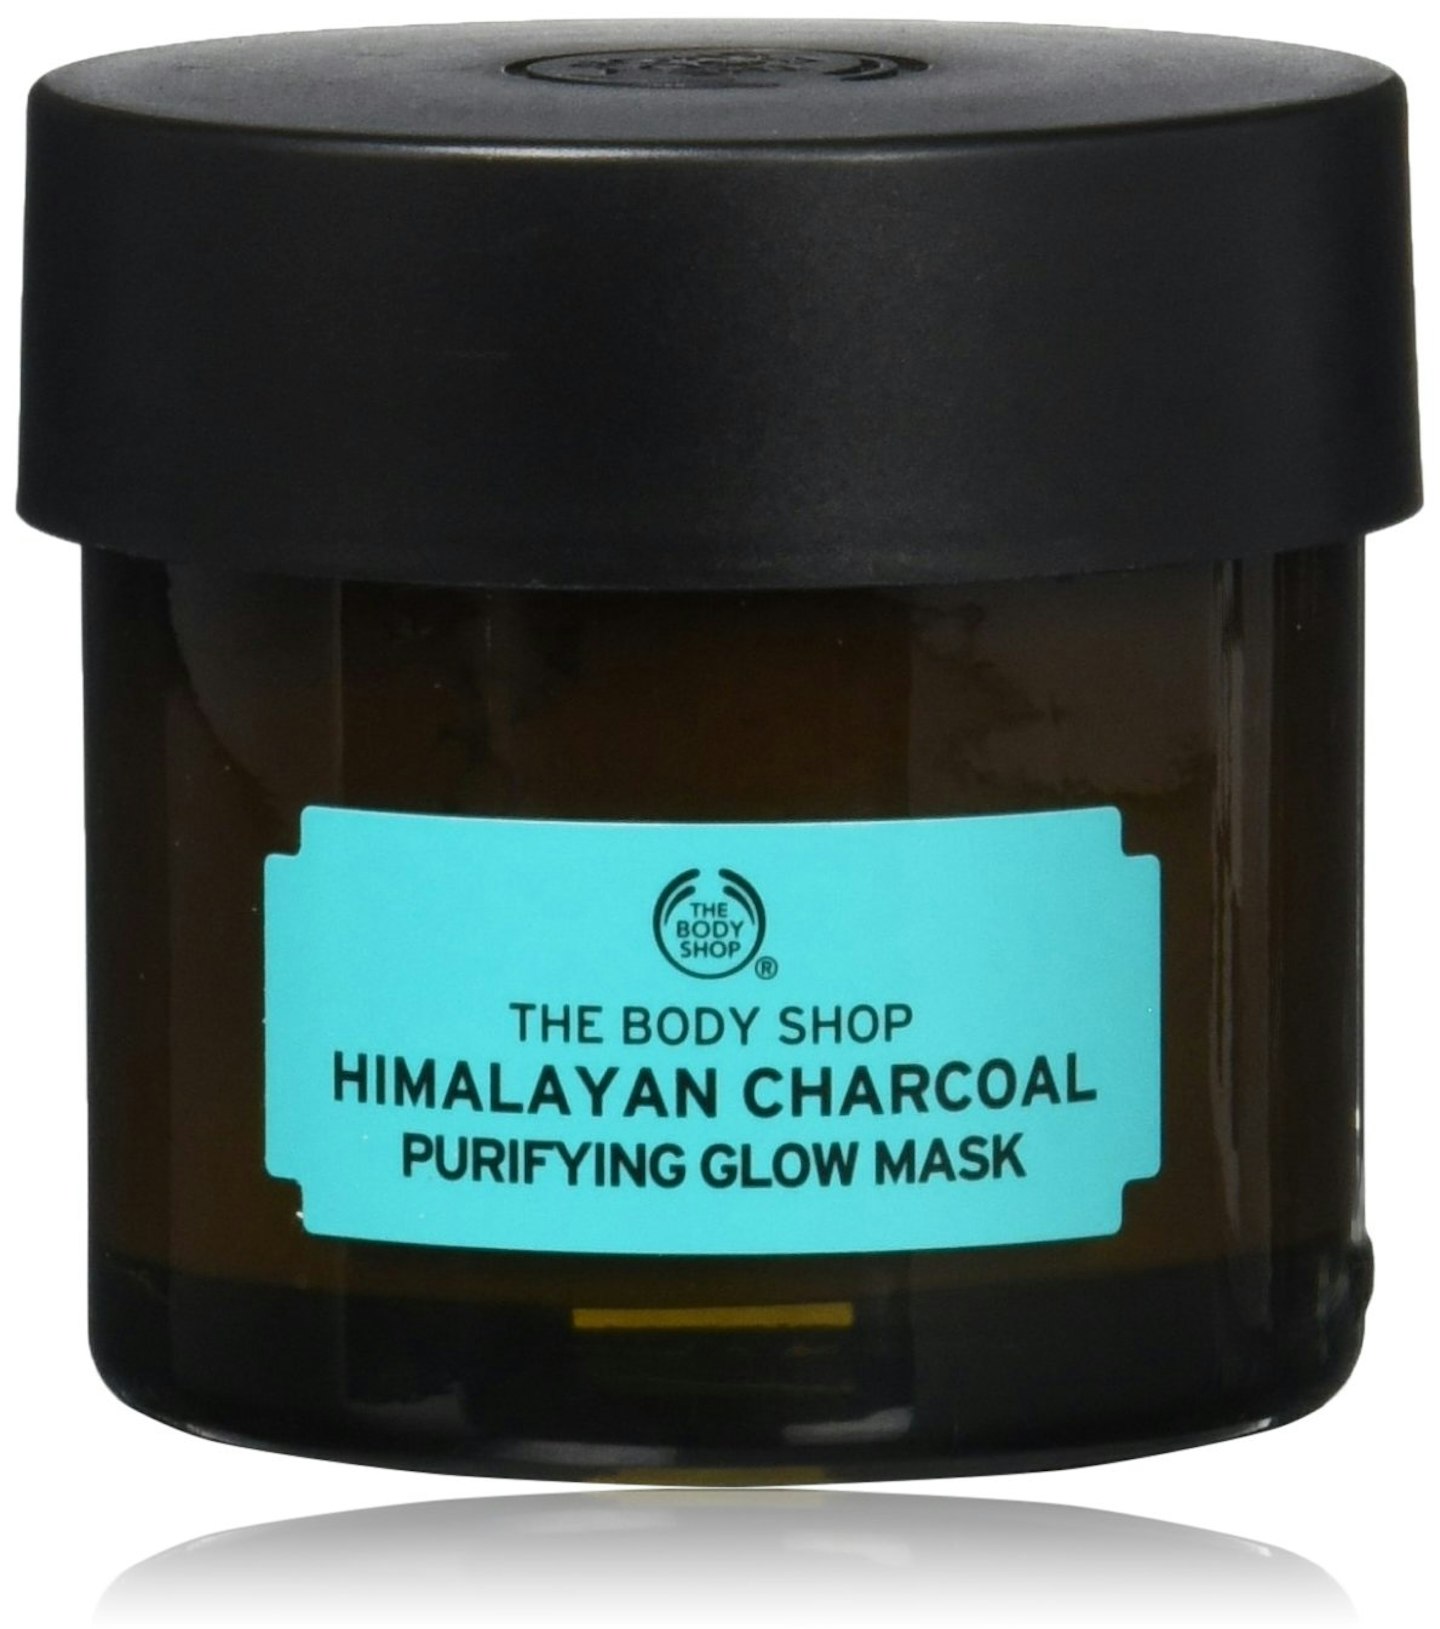 The Bodyshop Himalayan Charcoal Purifying Glow Mask, £18